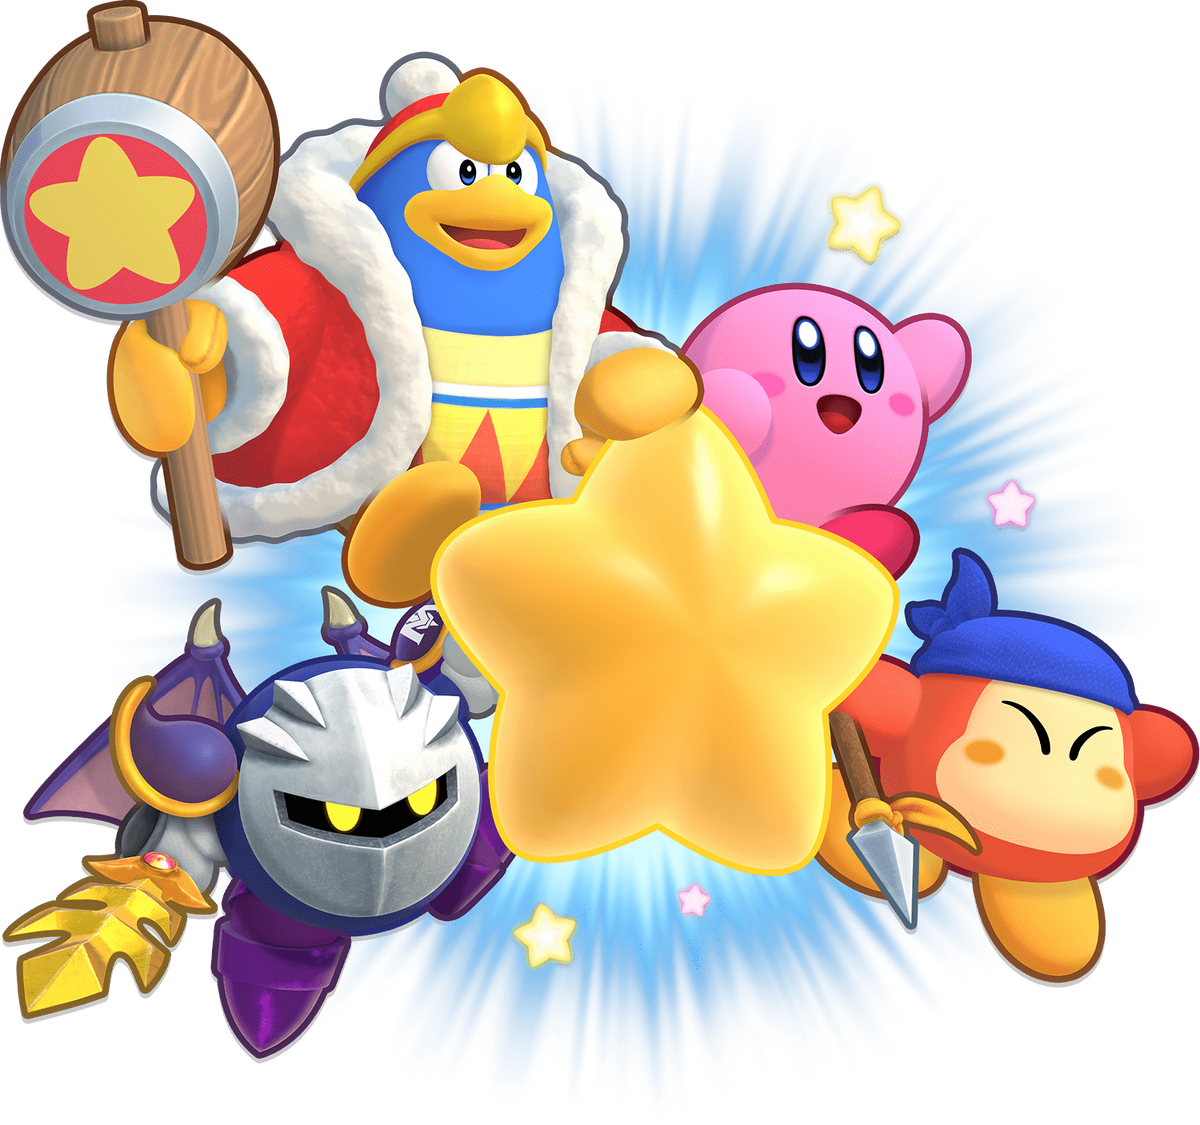 Kirby's Dream Land. Kirby's Return to Dream Land. Dreamland Deluxe Kirby. King Dedede Kirby Return to Dreamland Deluxe.